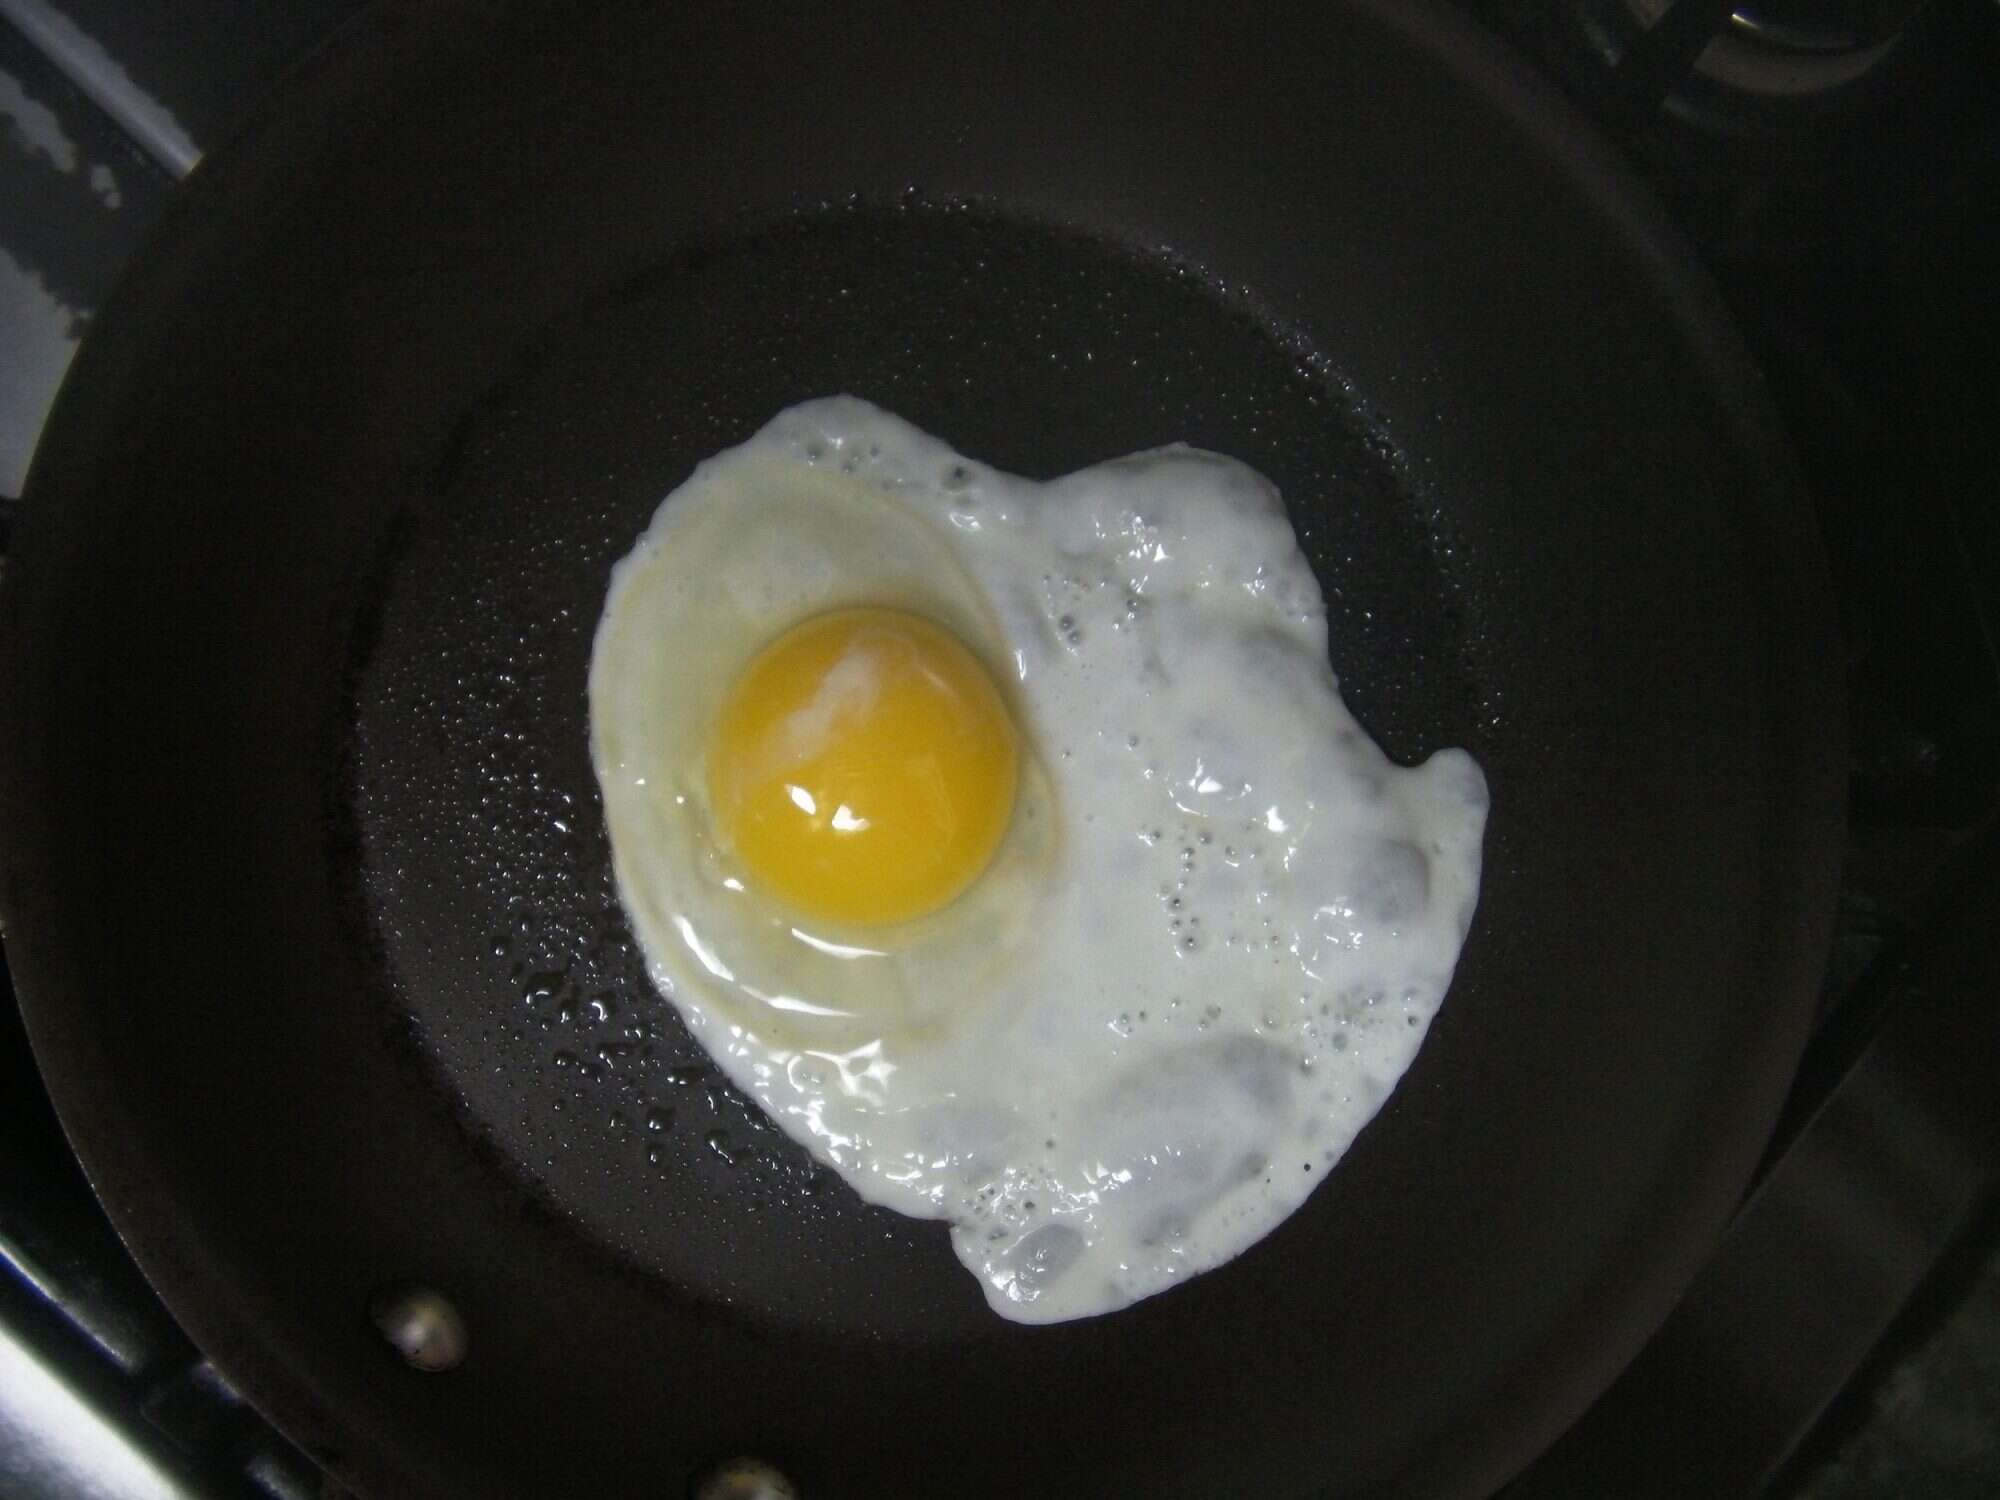 Kitchen Riffs: Fried Eggs